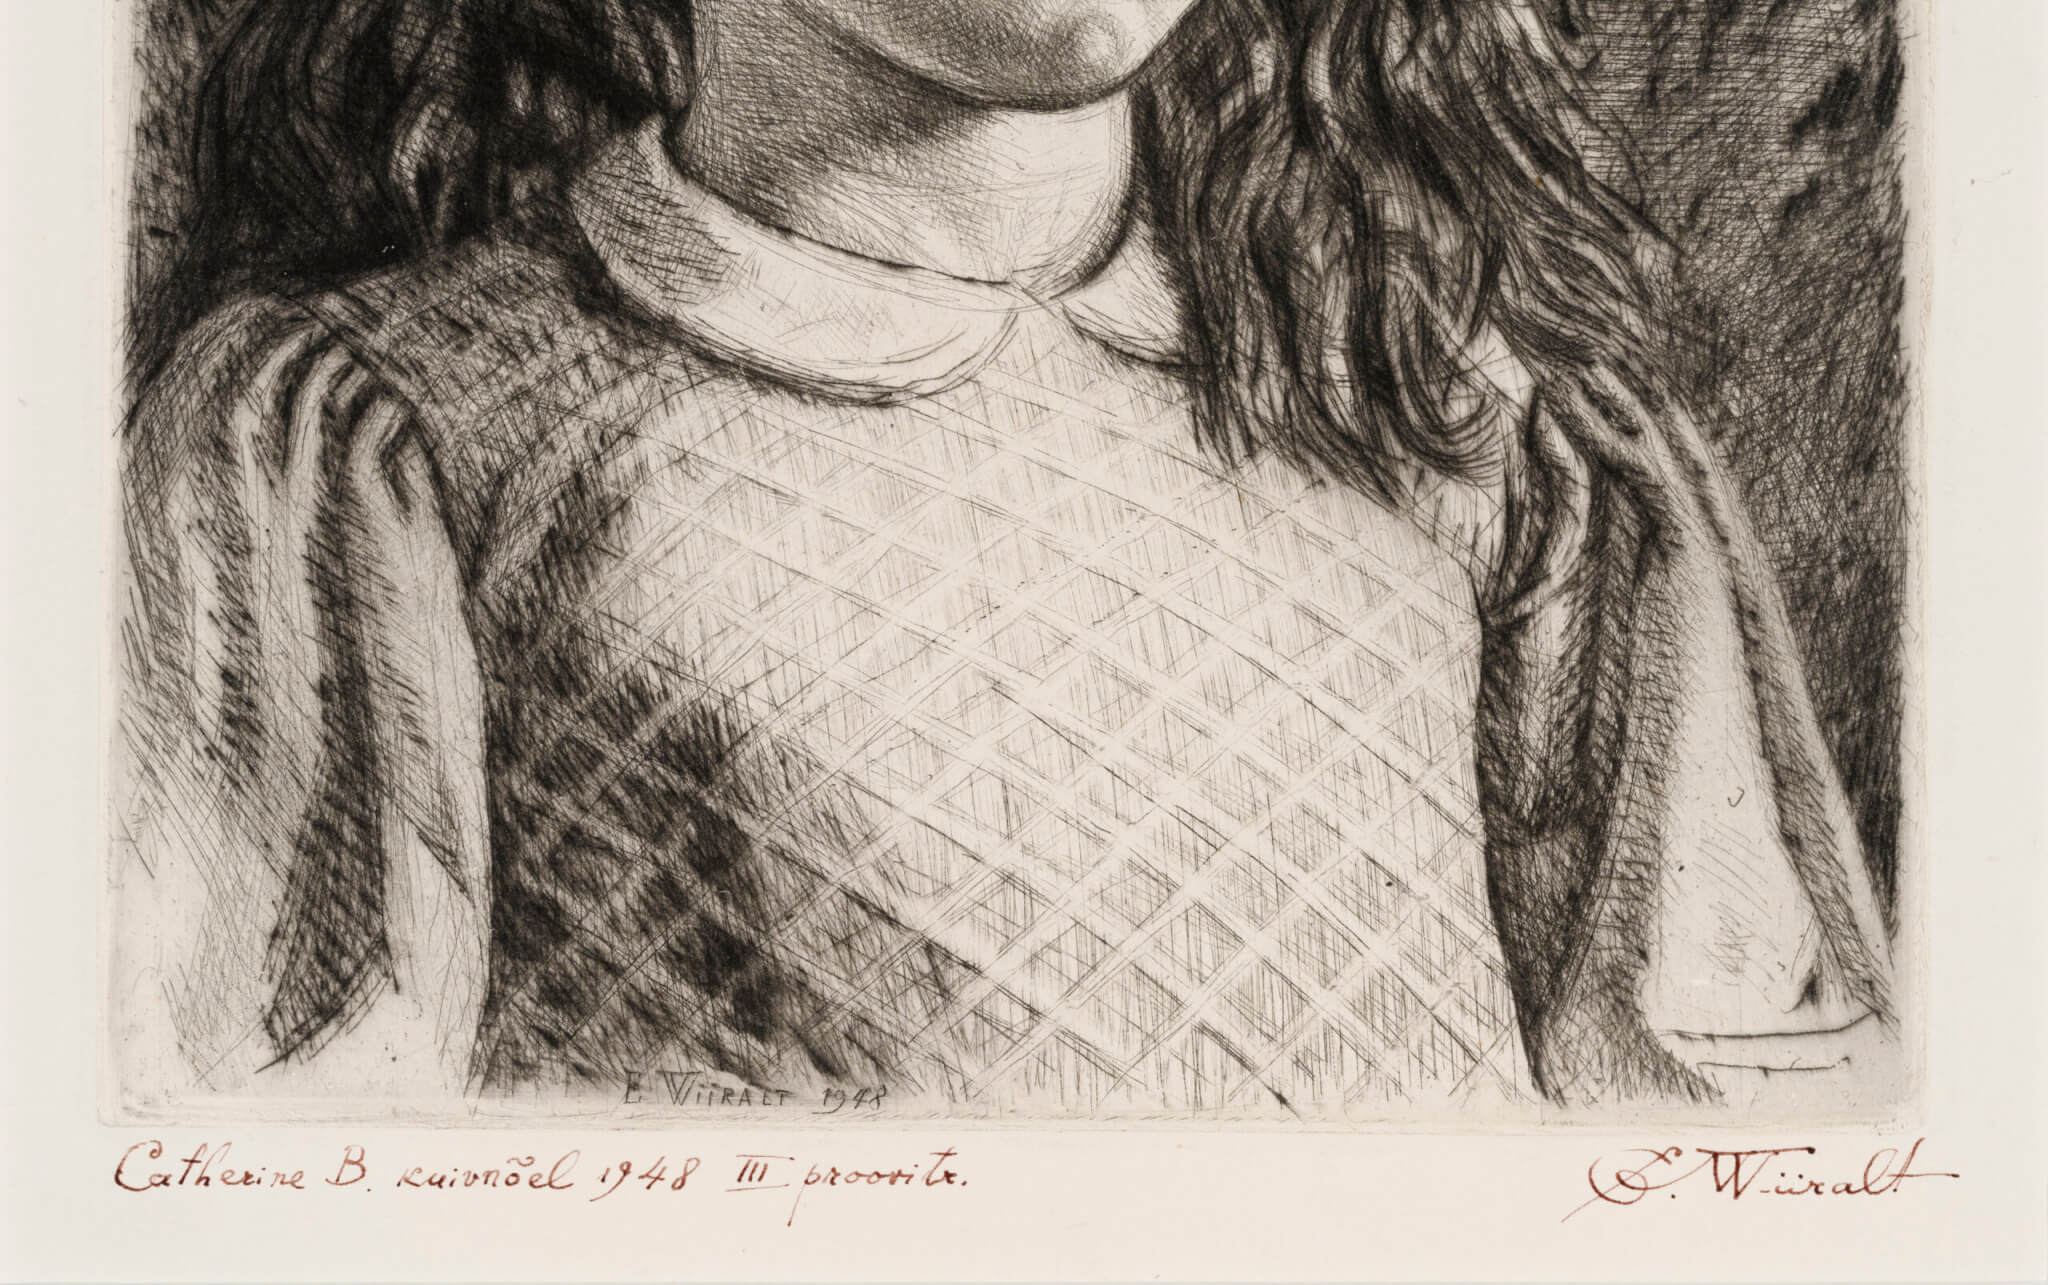 Eduard Wiiralt “Catherine Boullaire’i portree”, 1948